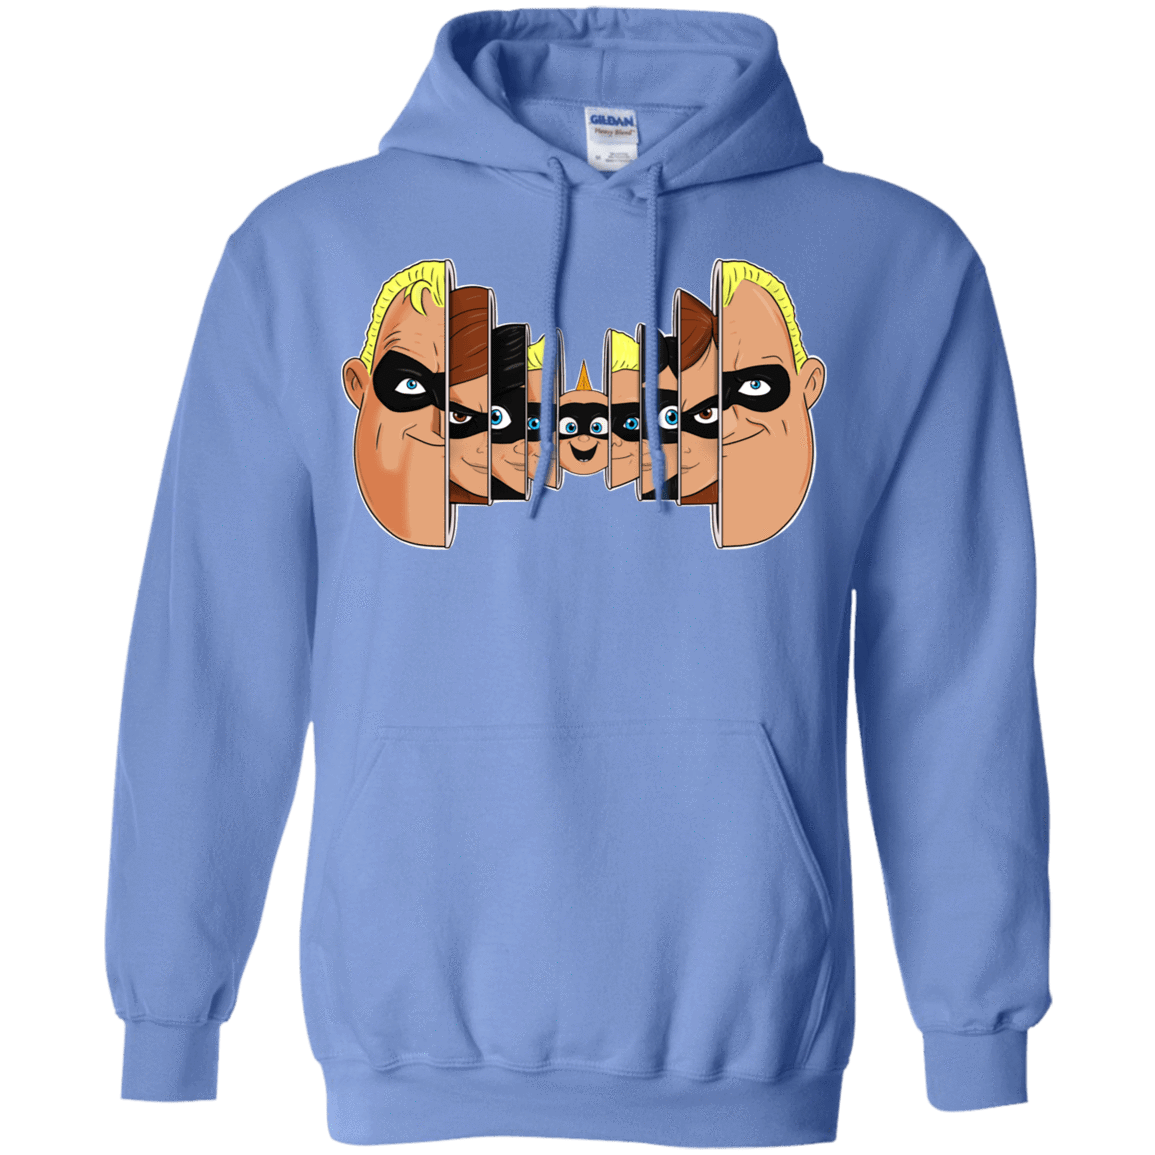 Sweatshirts Carolina Blue / S Incredibles Pullover Hoodie